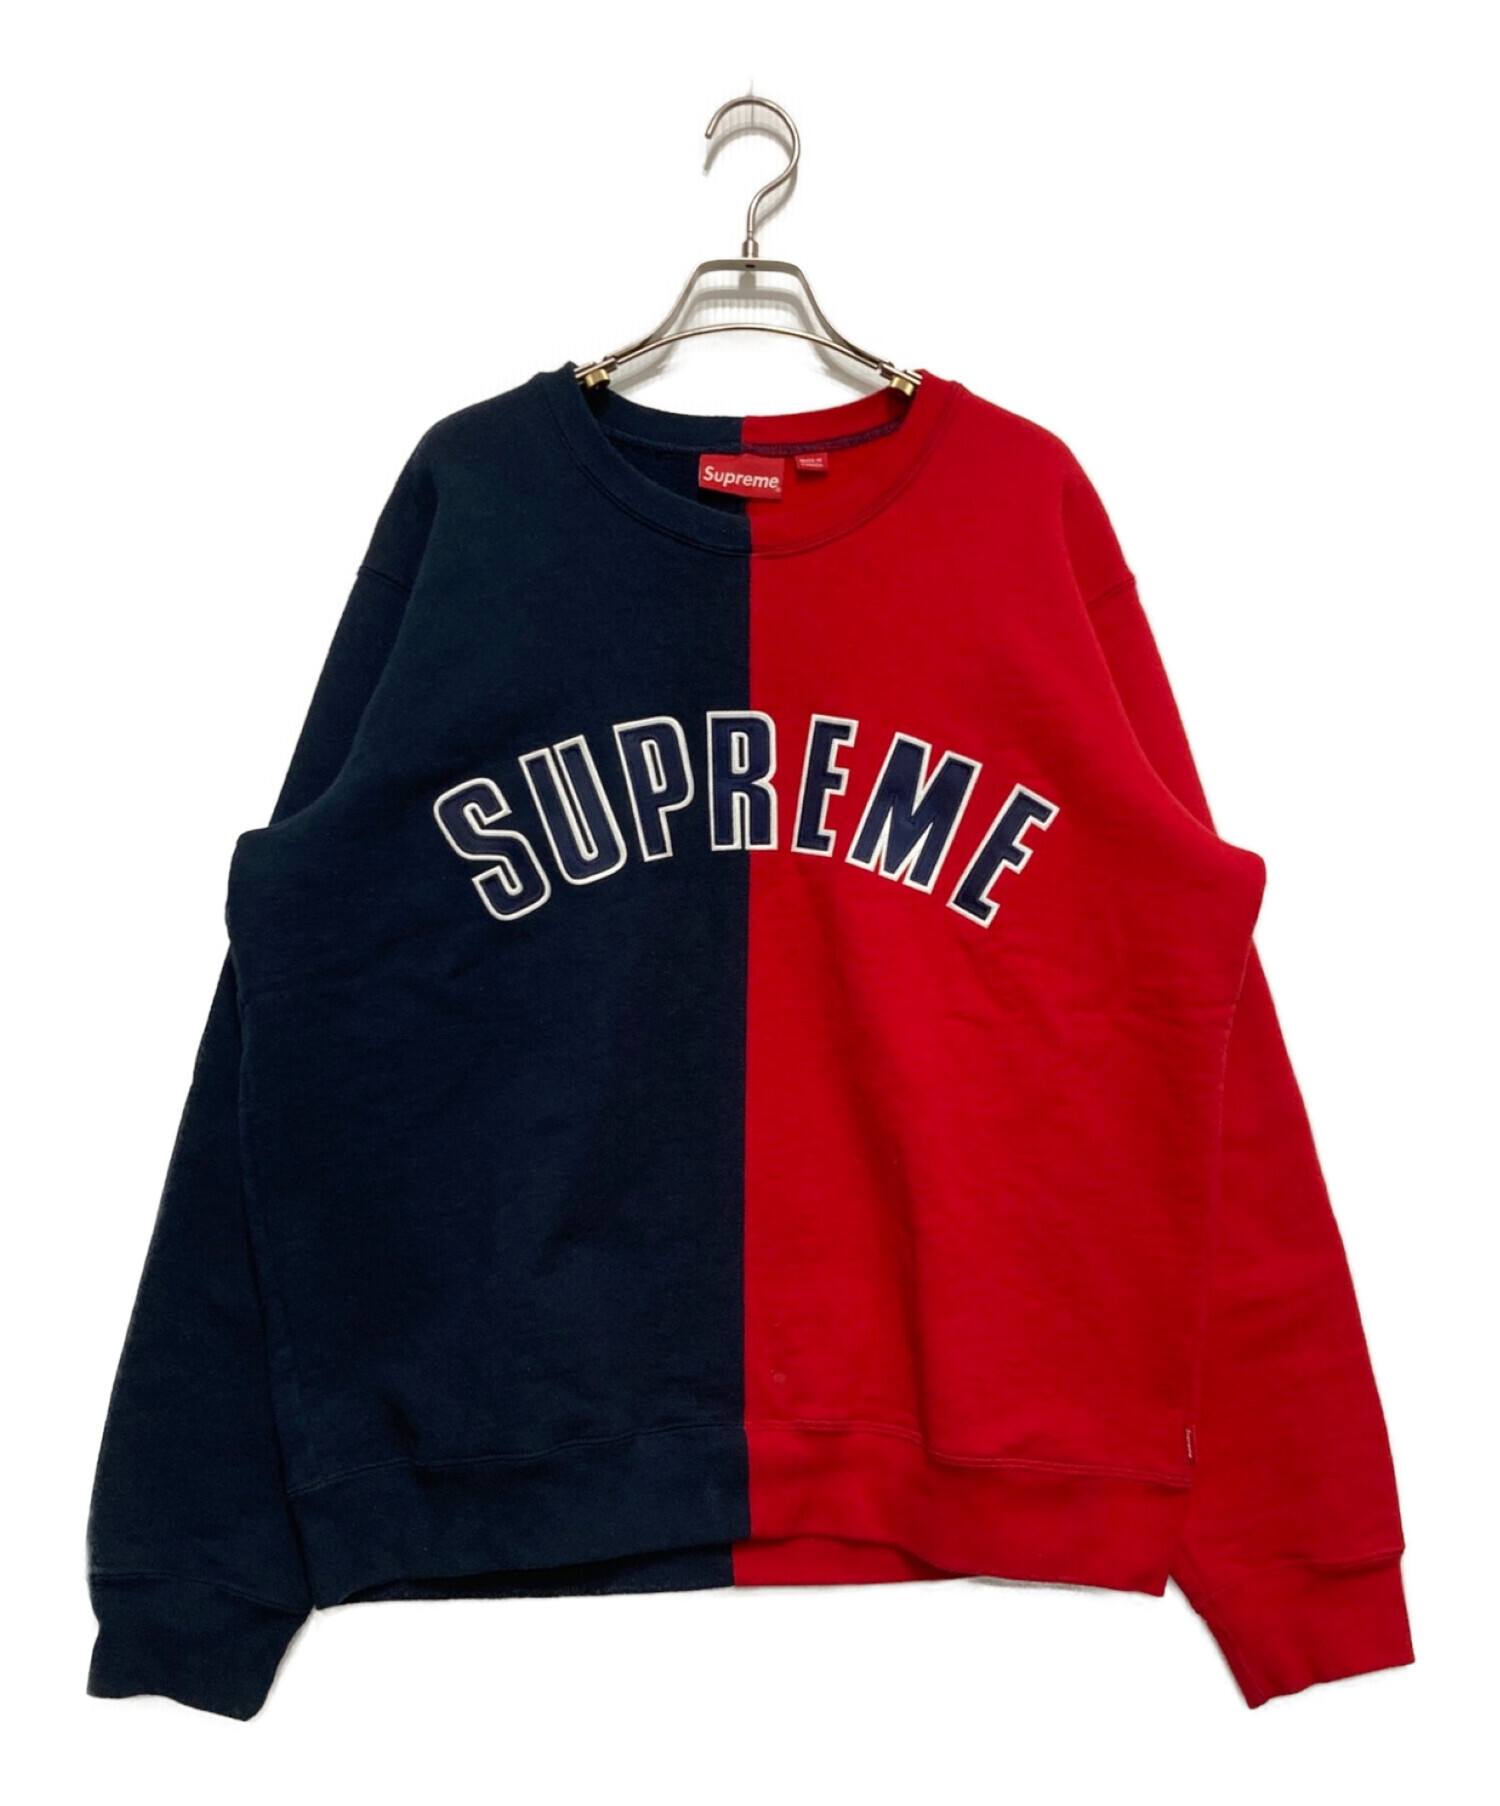 Supreme (シュプリーム) split crewneck sweatshirt レッド×ネイビー サイズ:Ⅿ